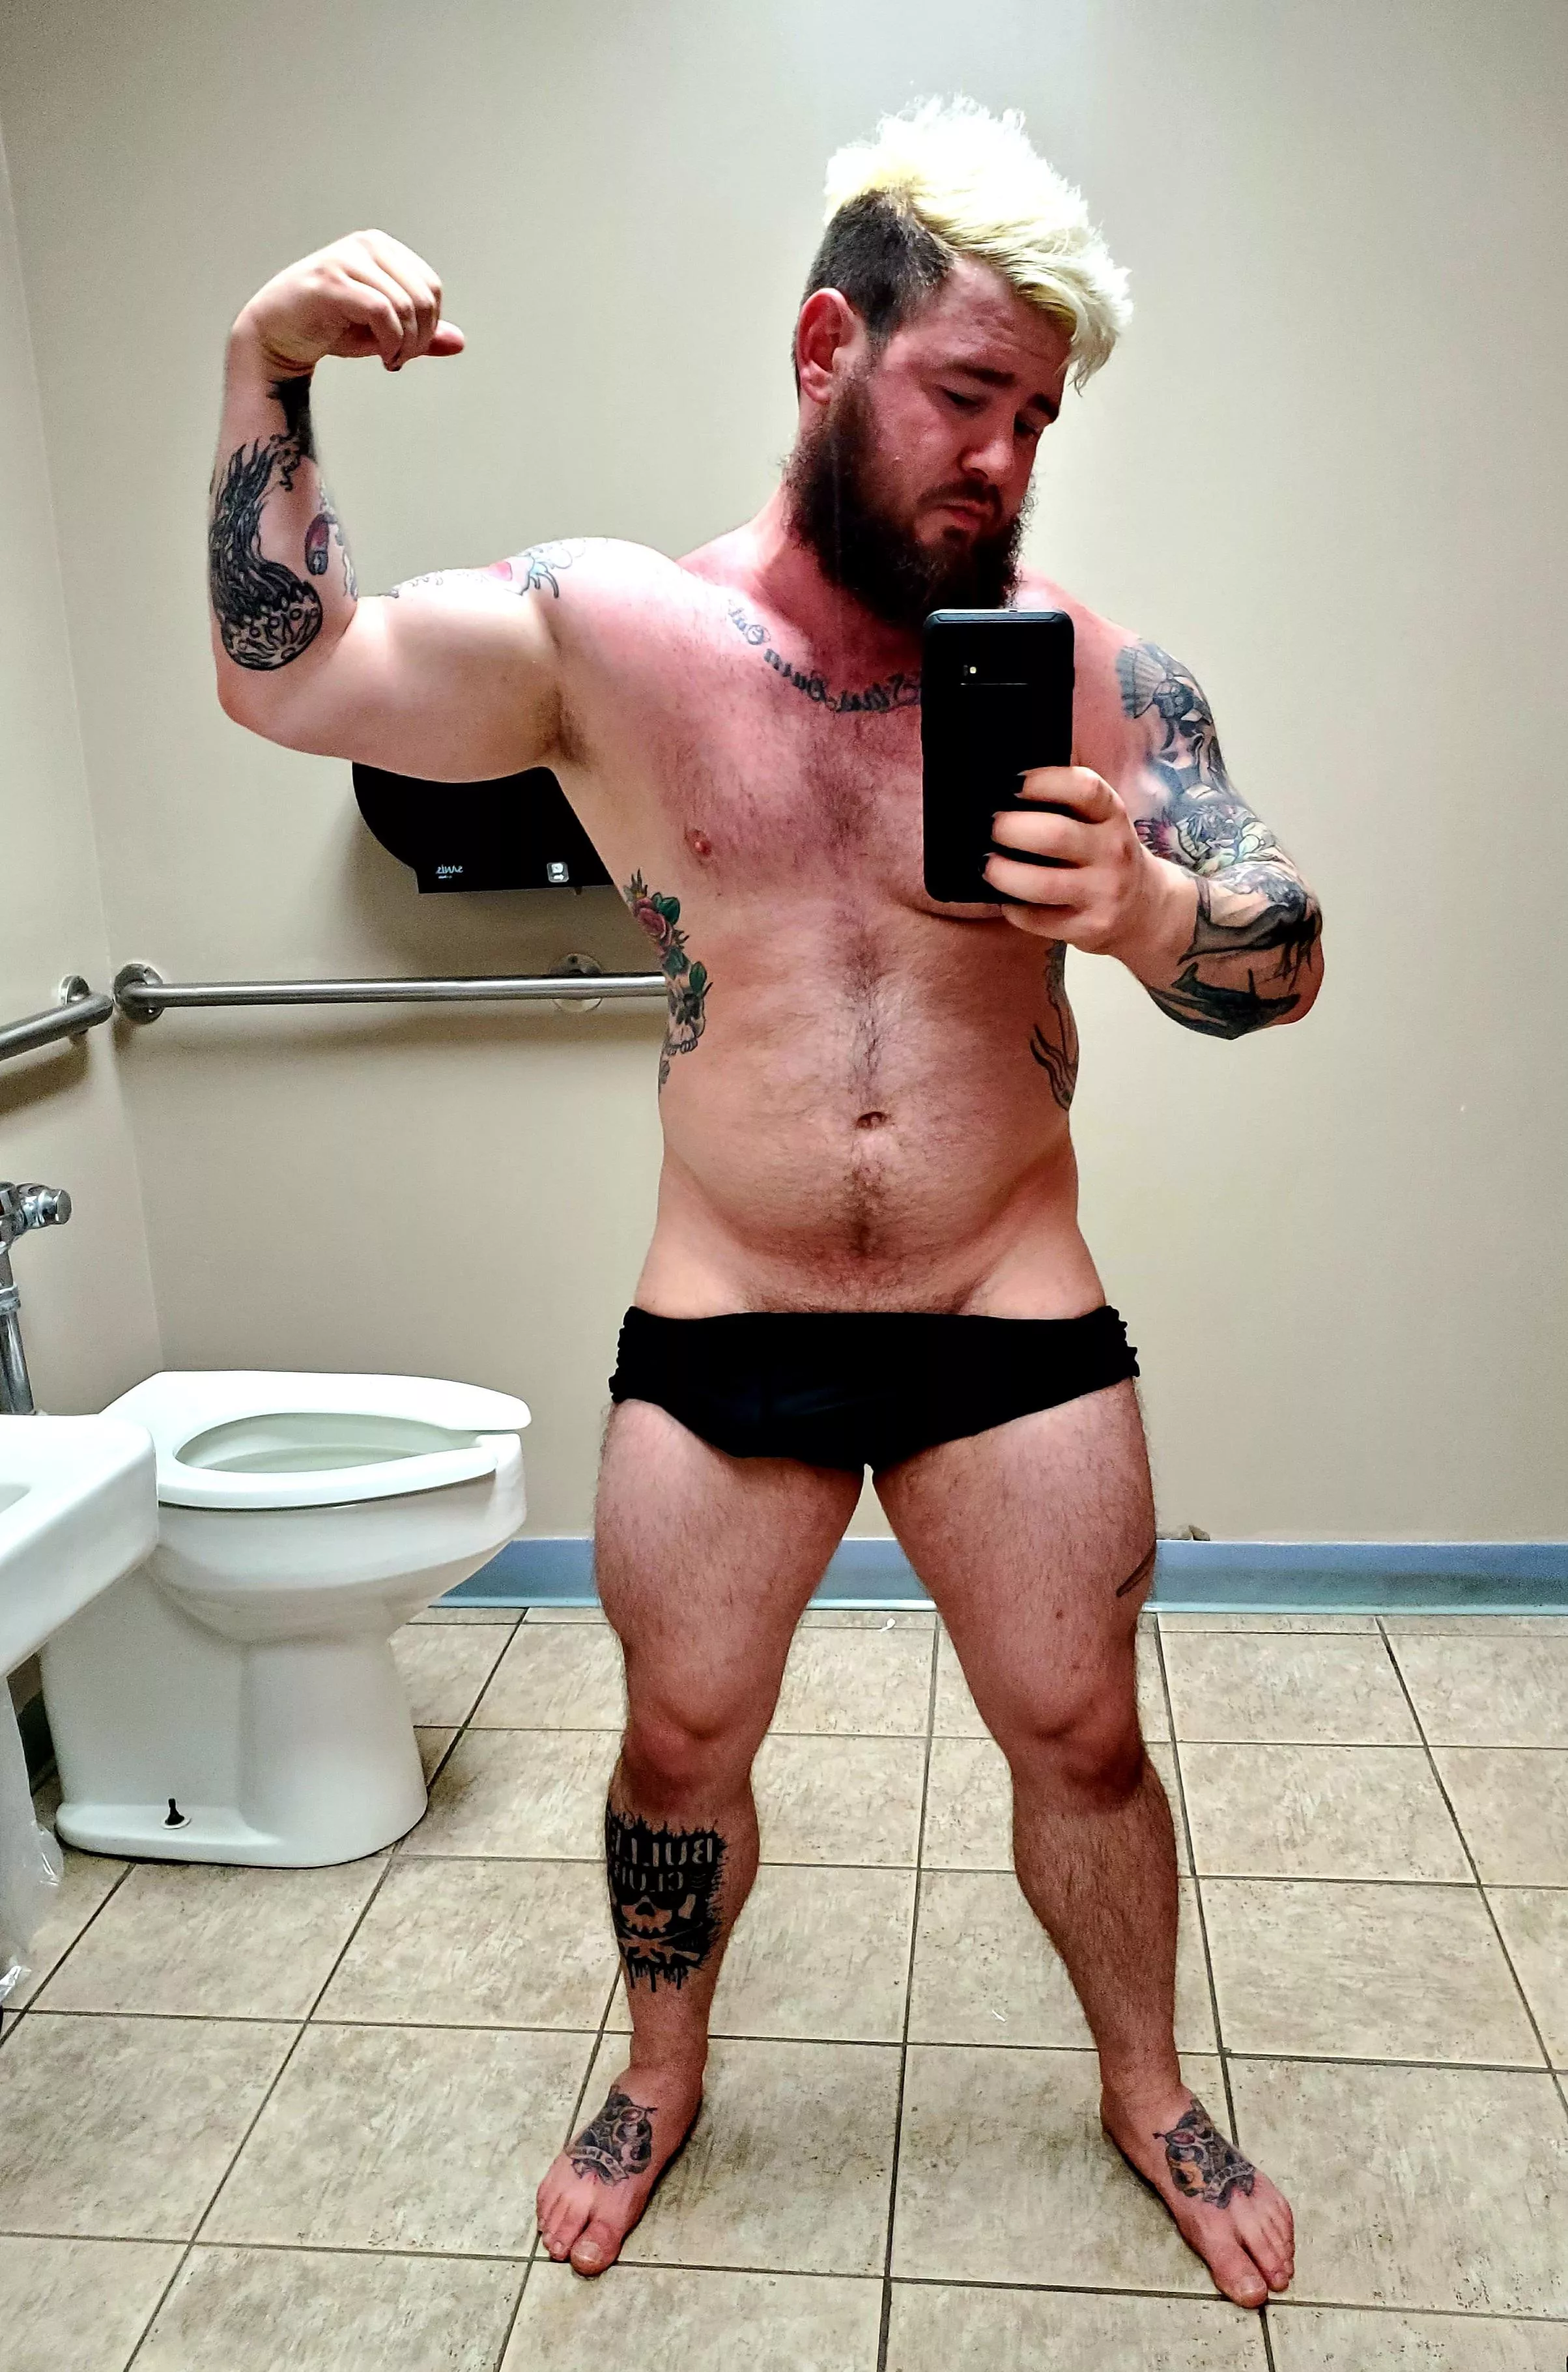 public bathroom nude selfie